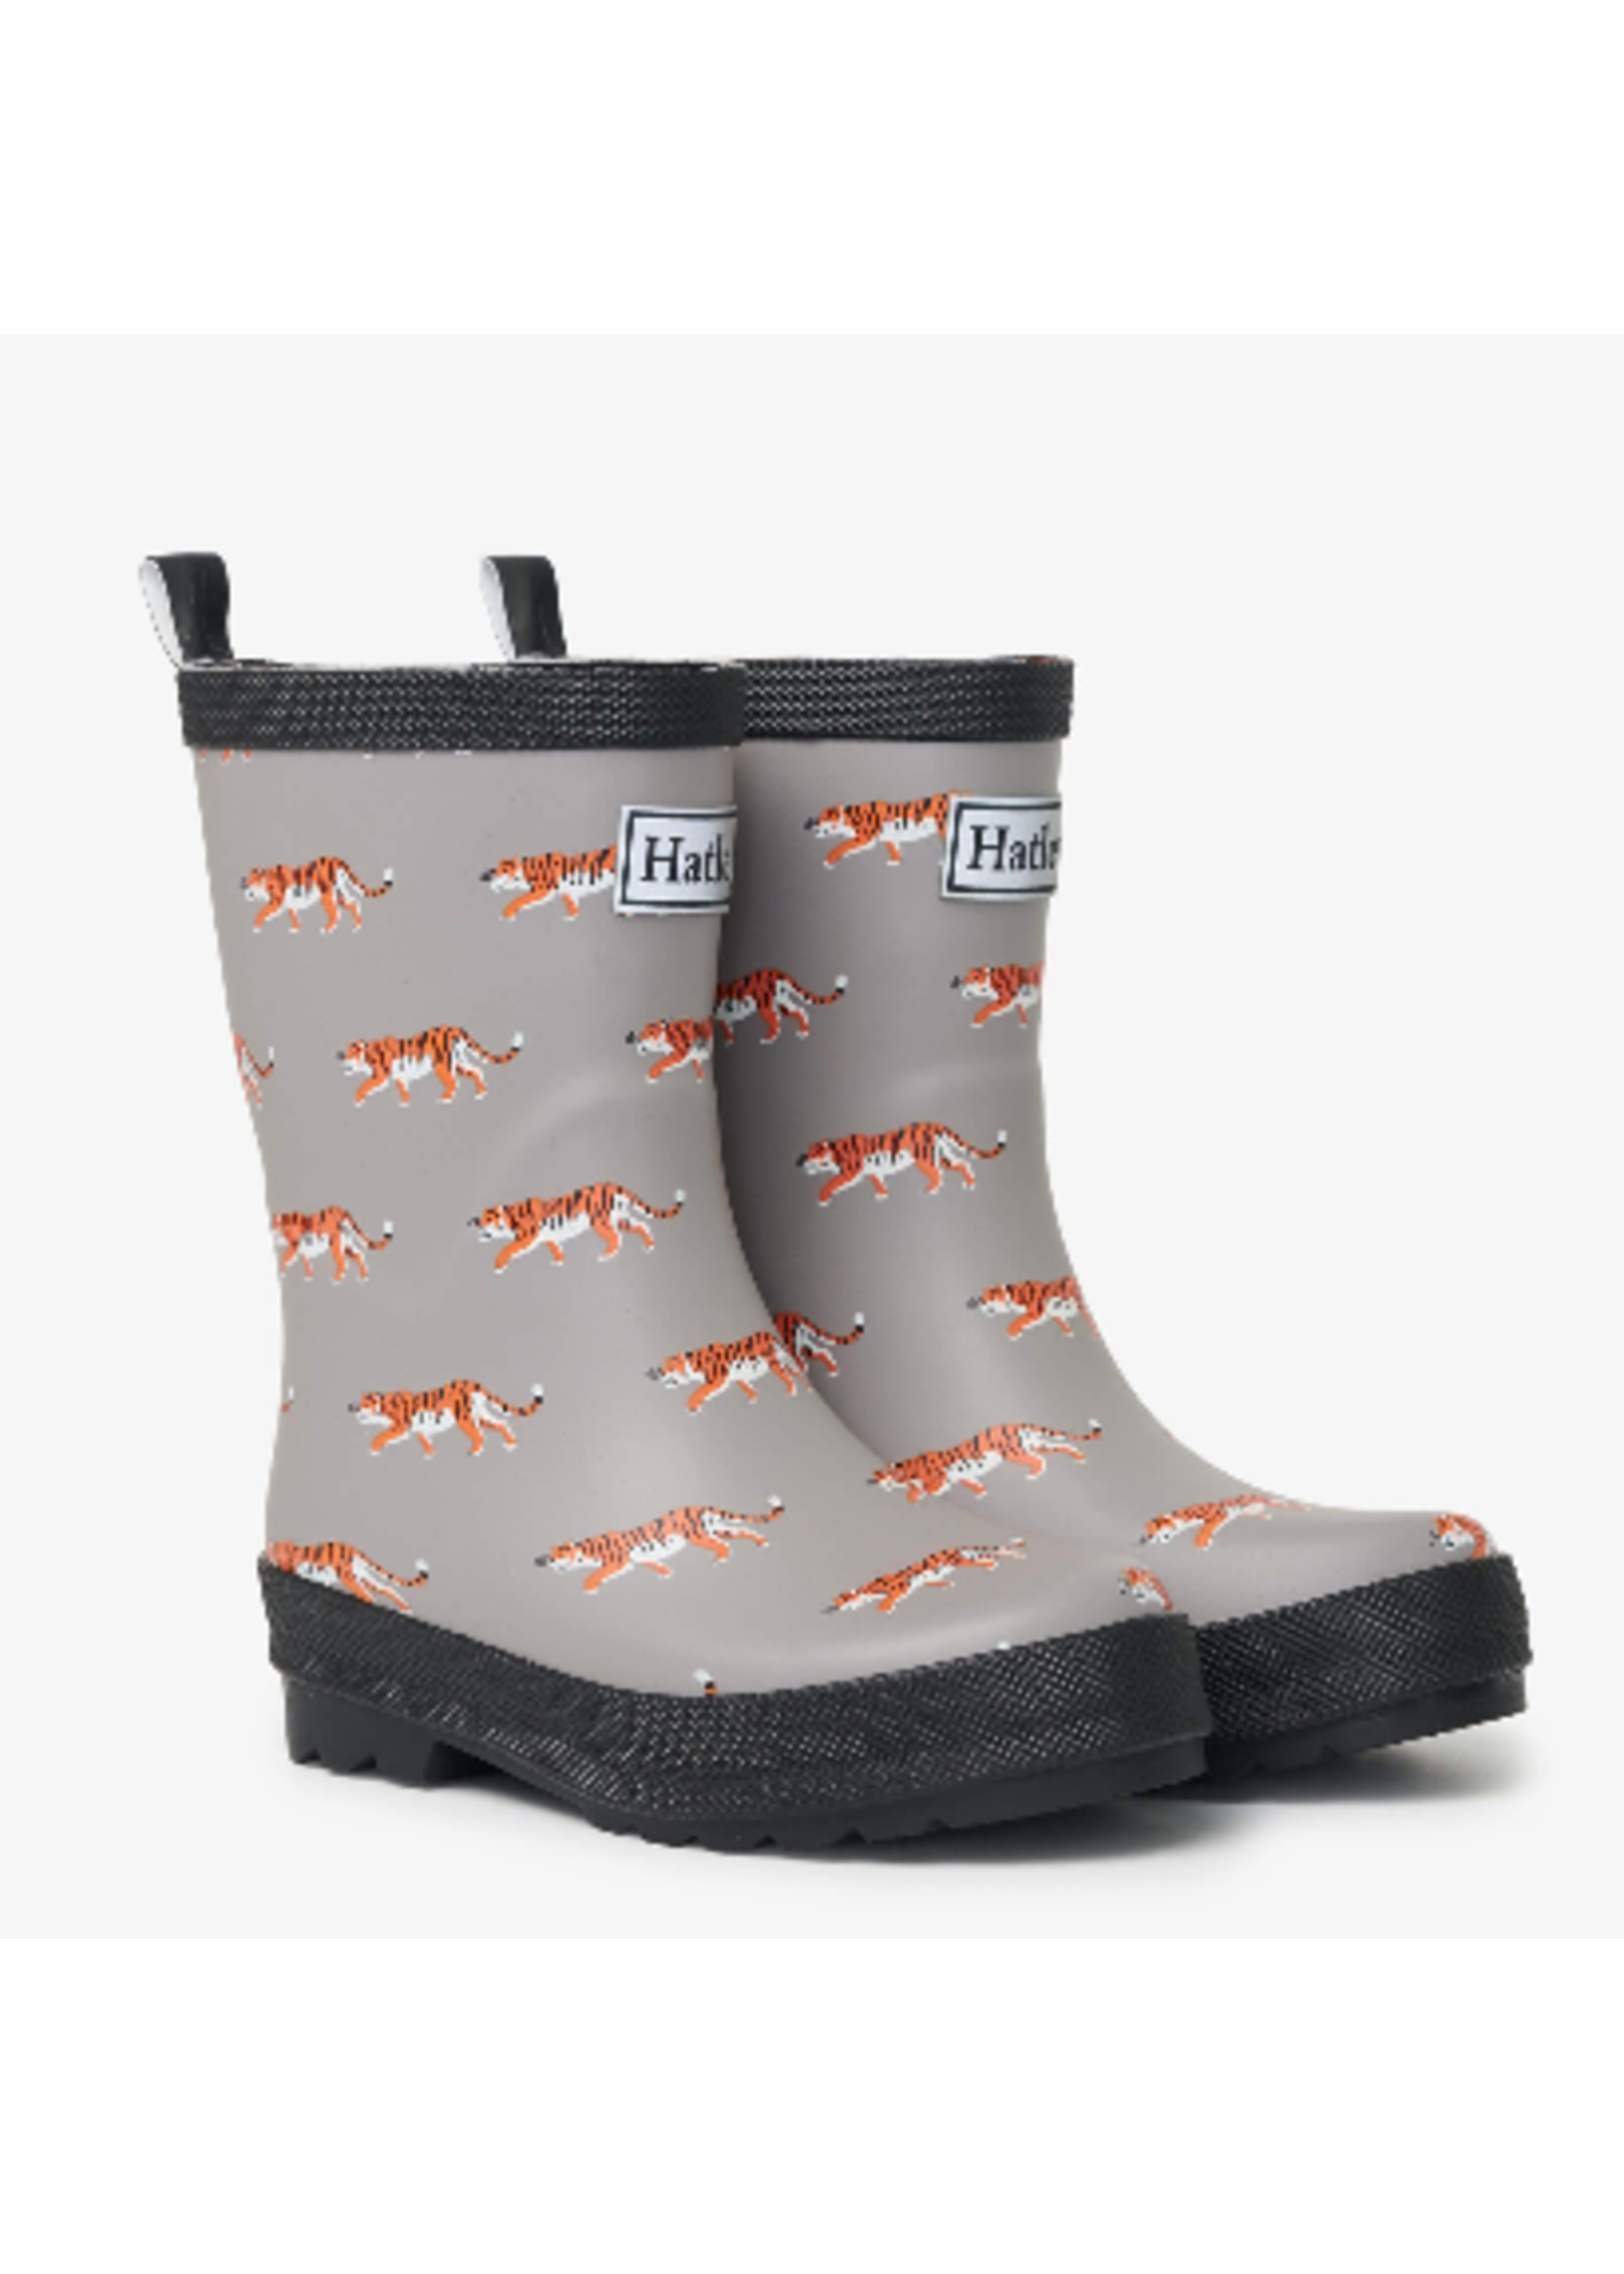 Hatley Hatley Roaming Tigers Matte Rain Boots